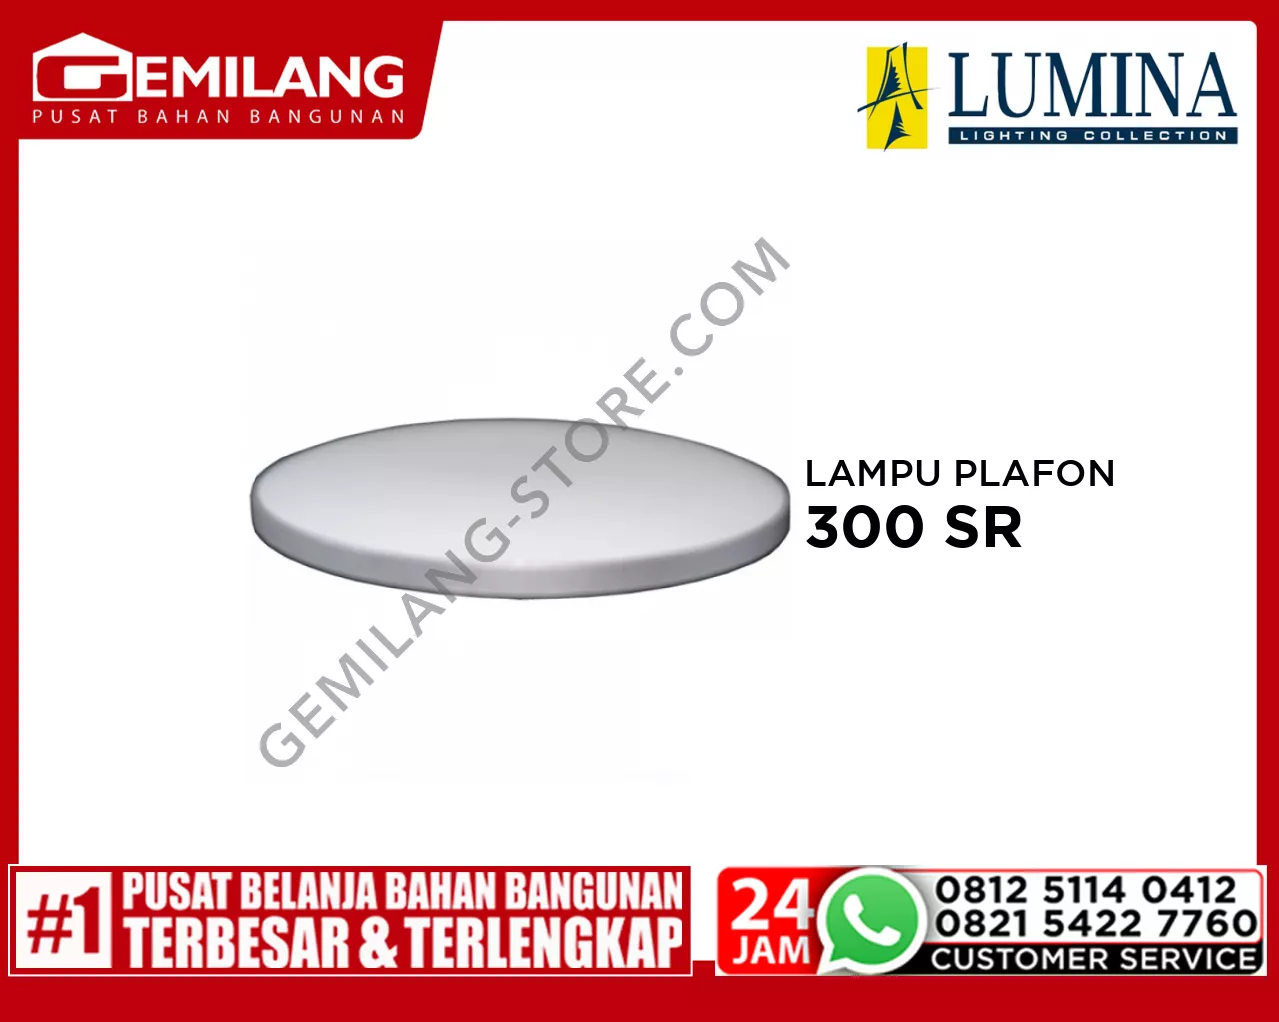 LAMPU PLAFON OB-231-300 SR